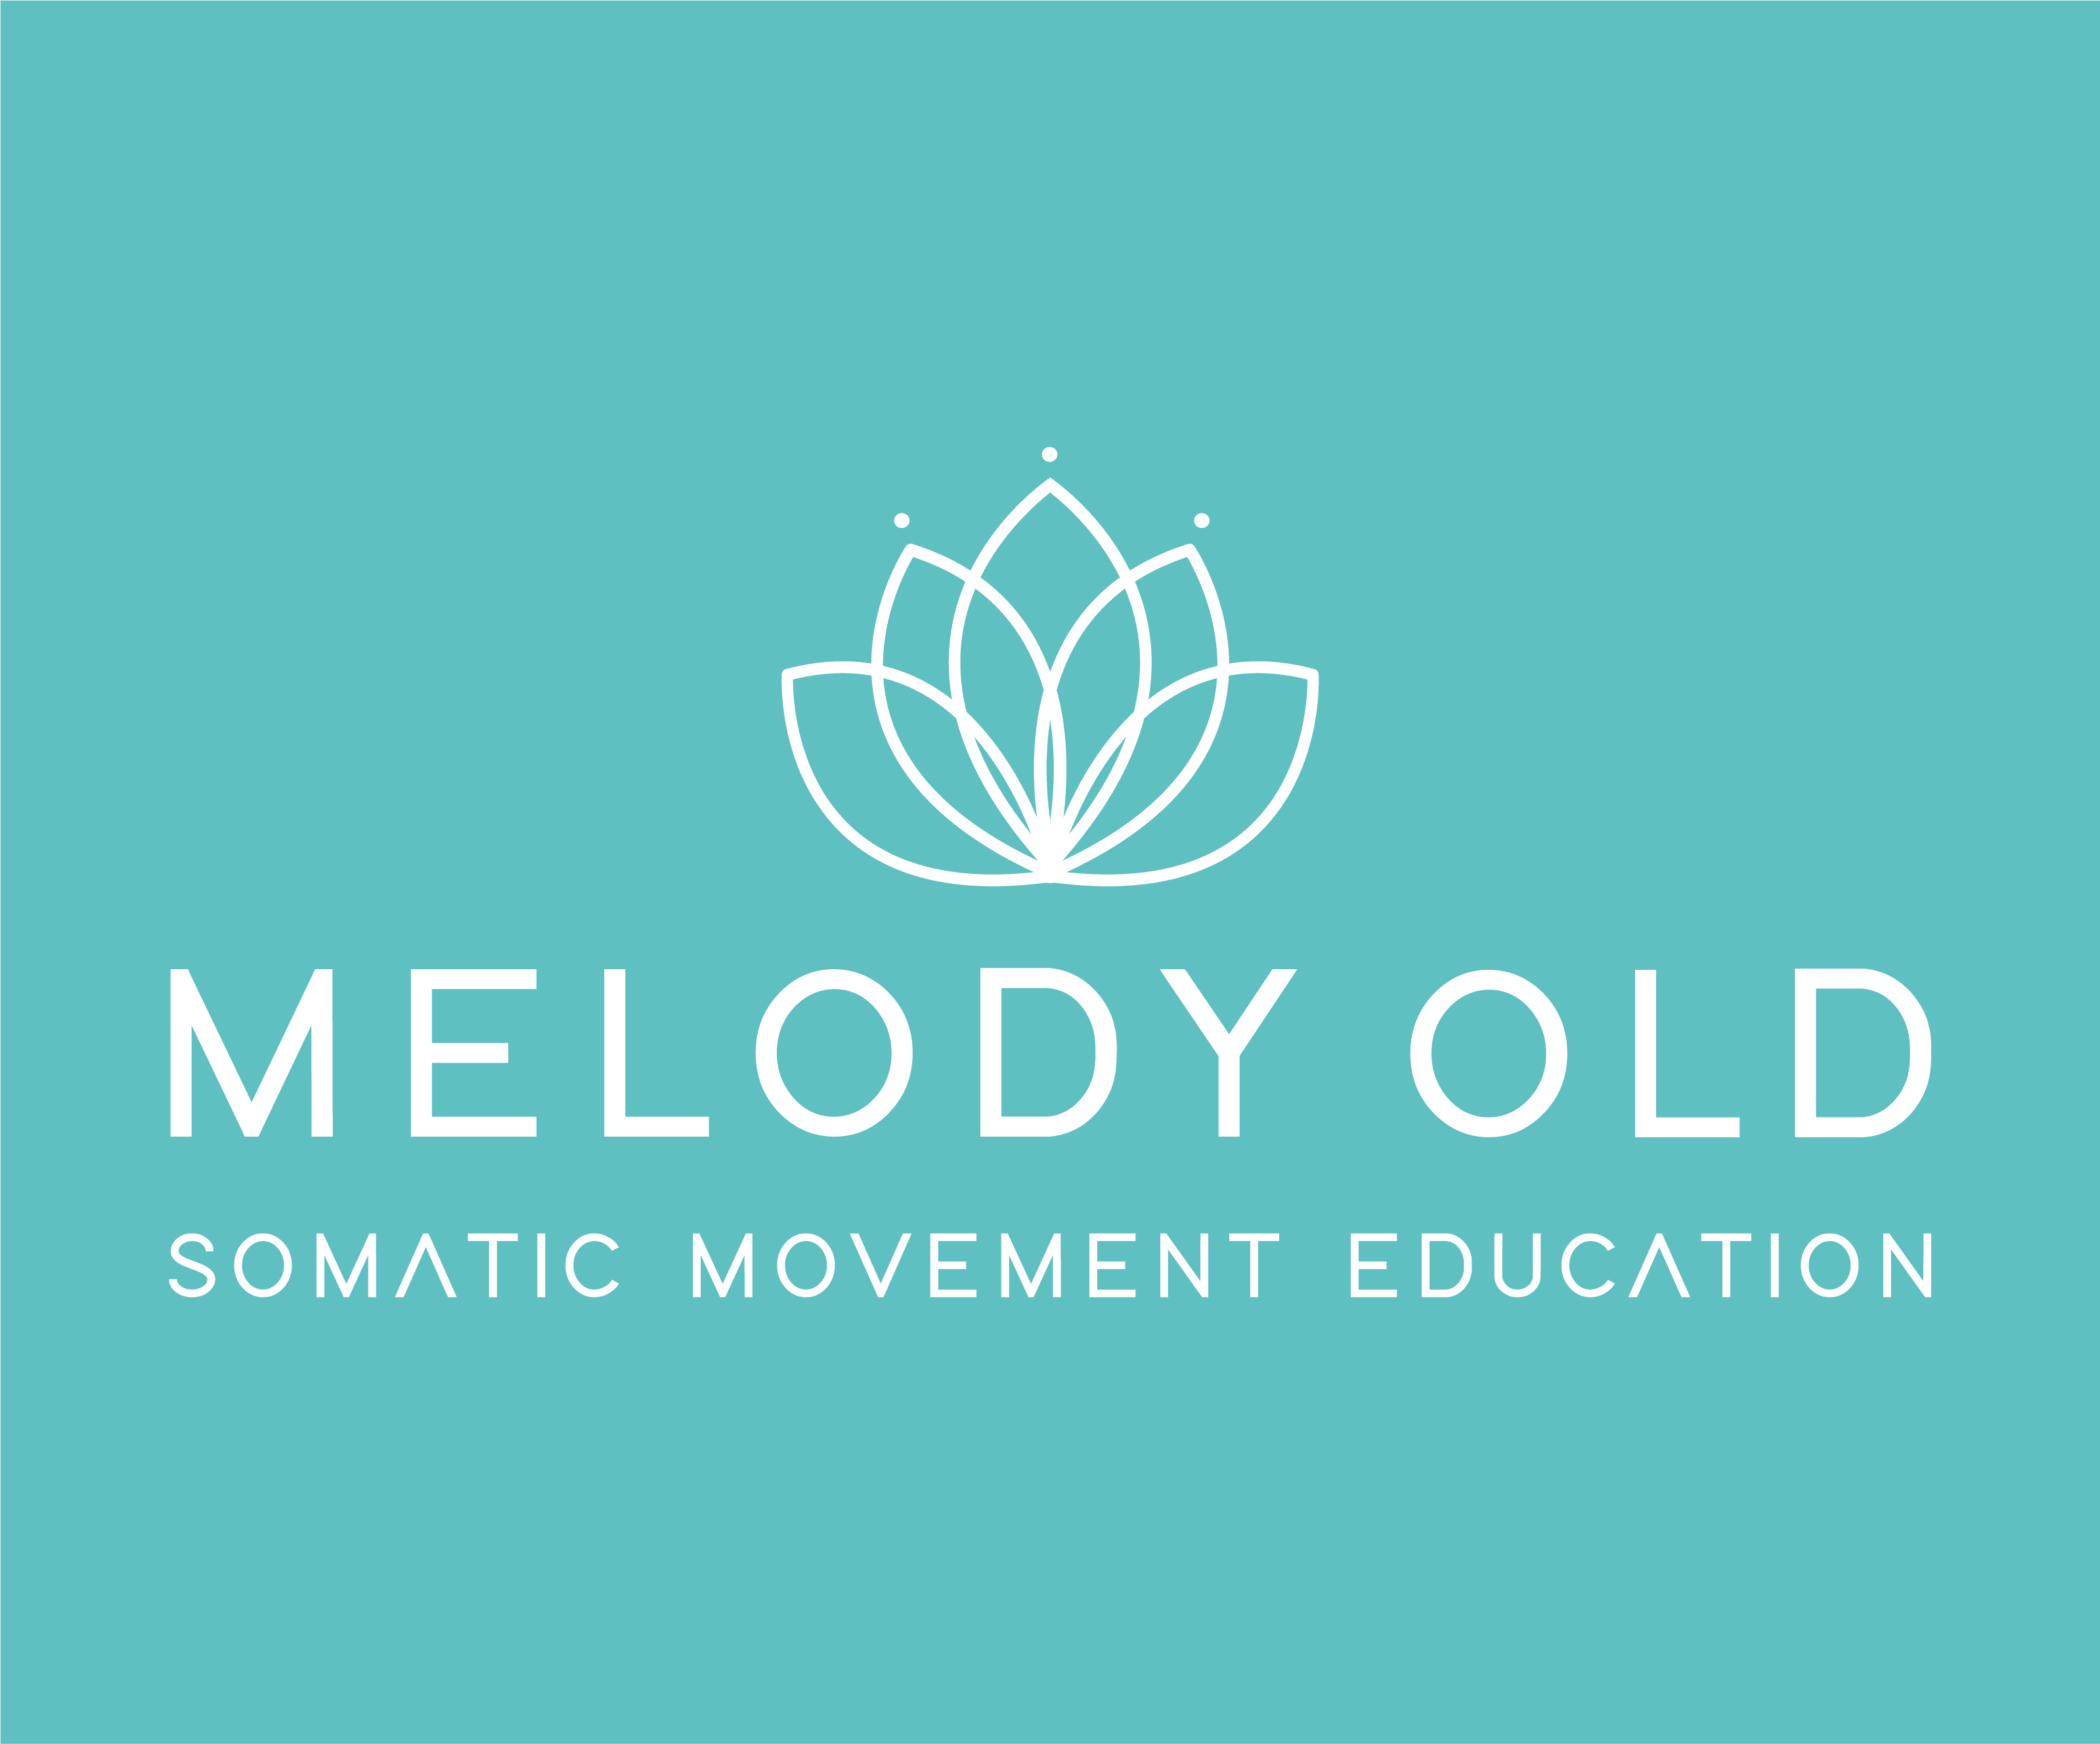 Somatic Movement Education